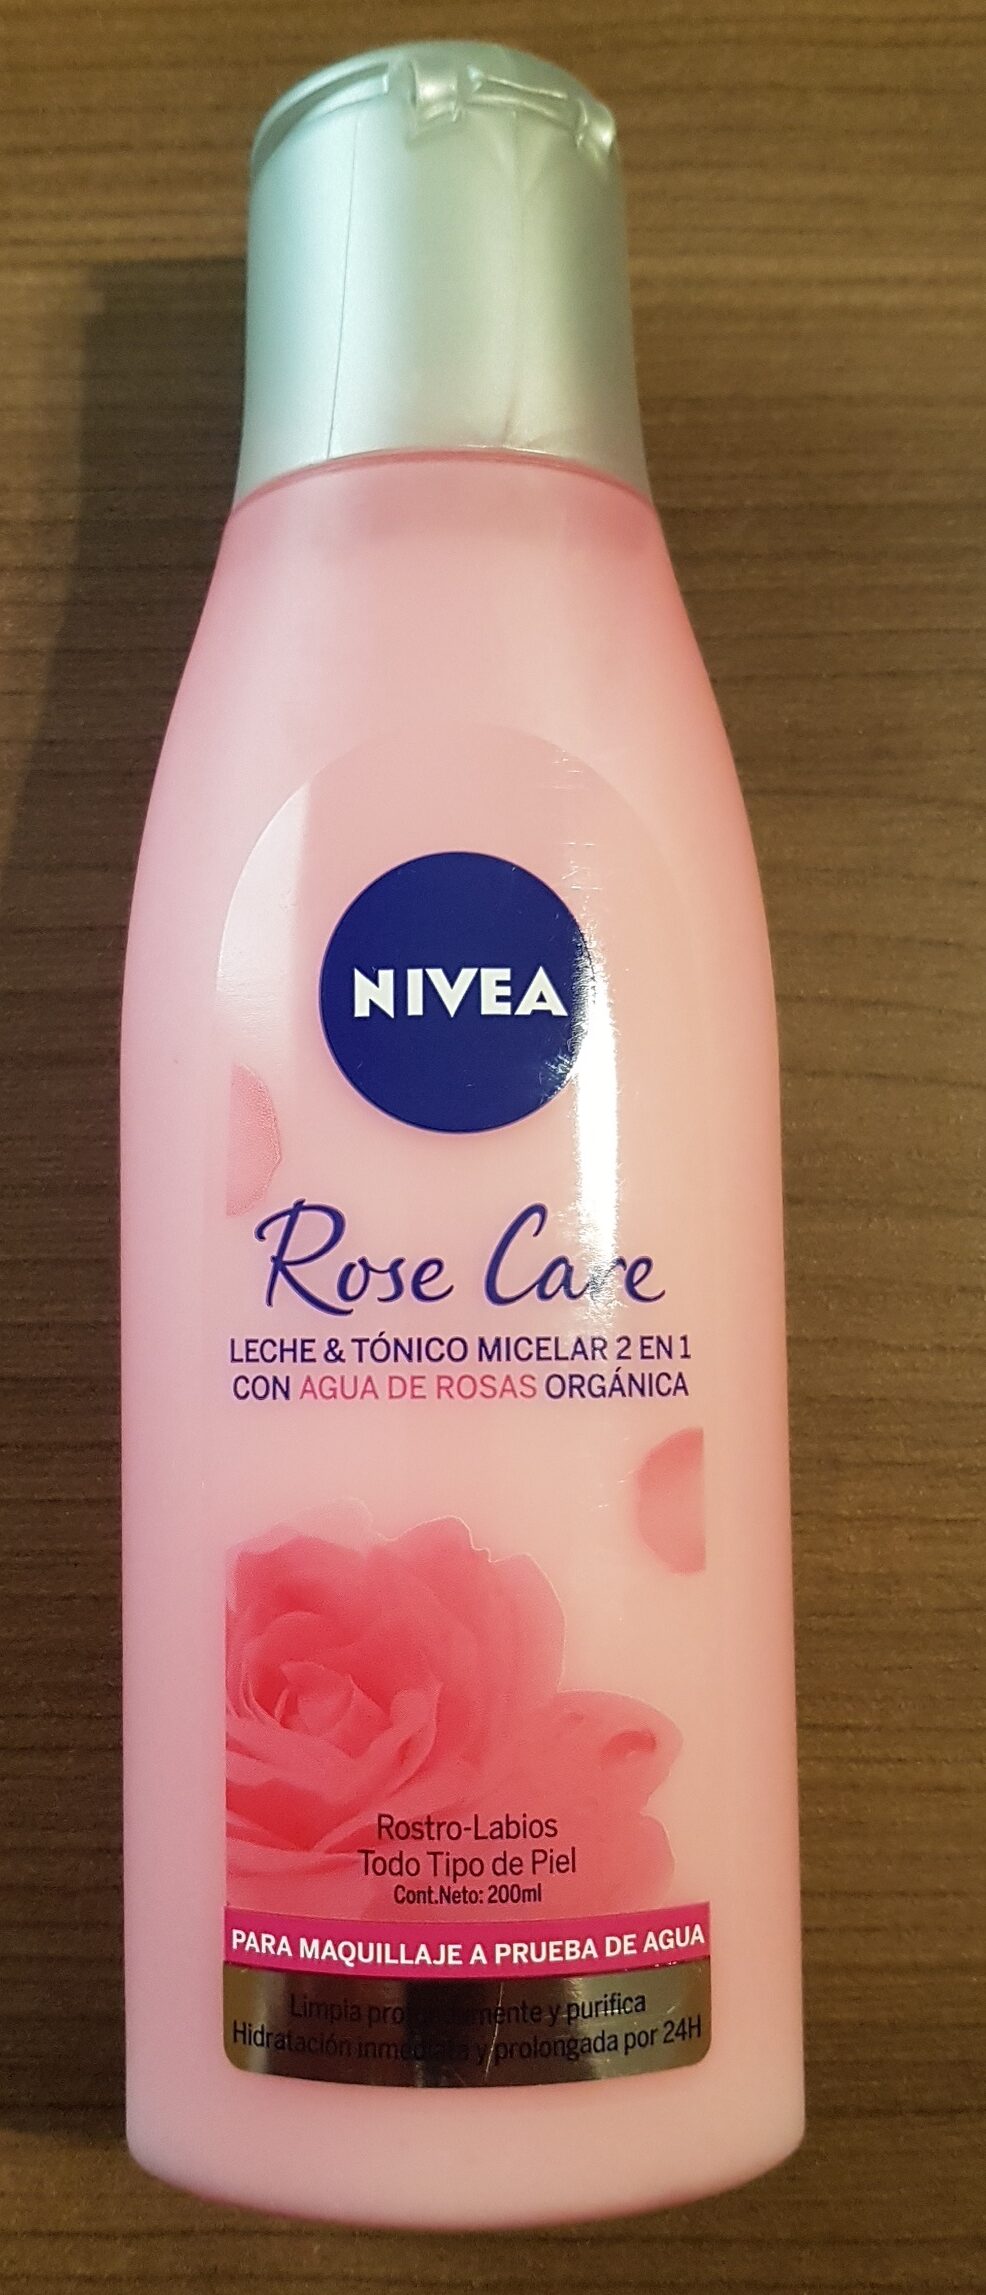 Rose care - Product - en